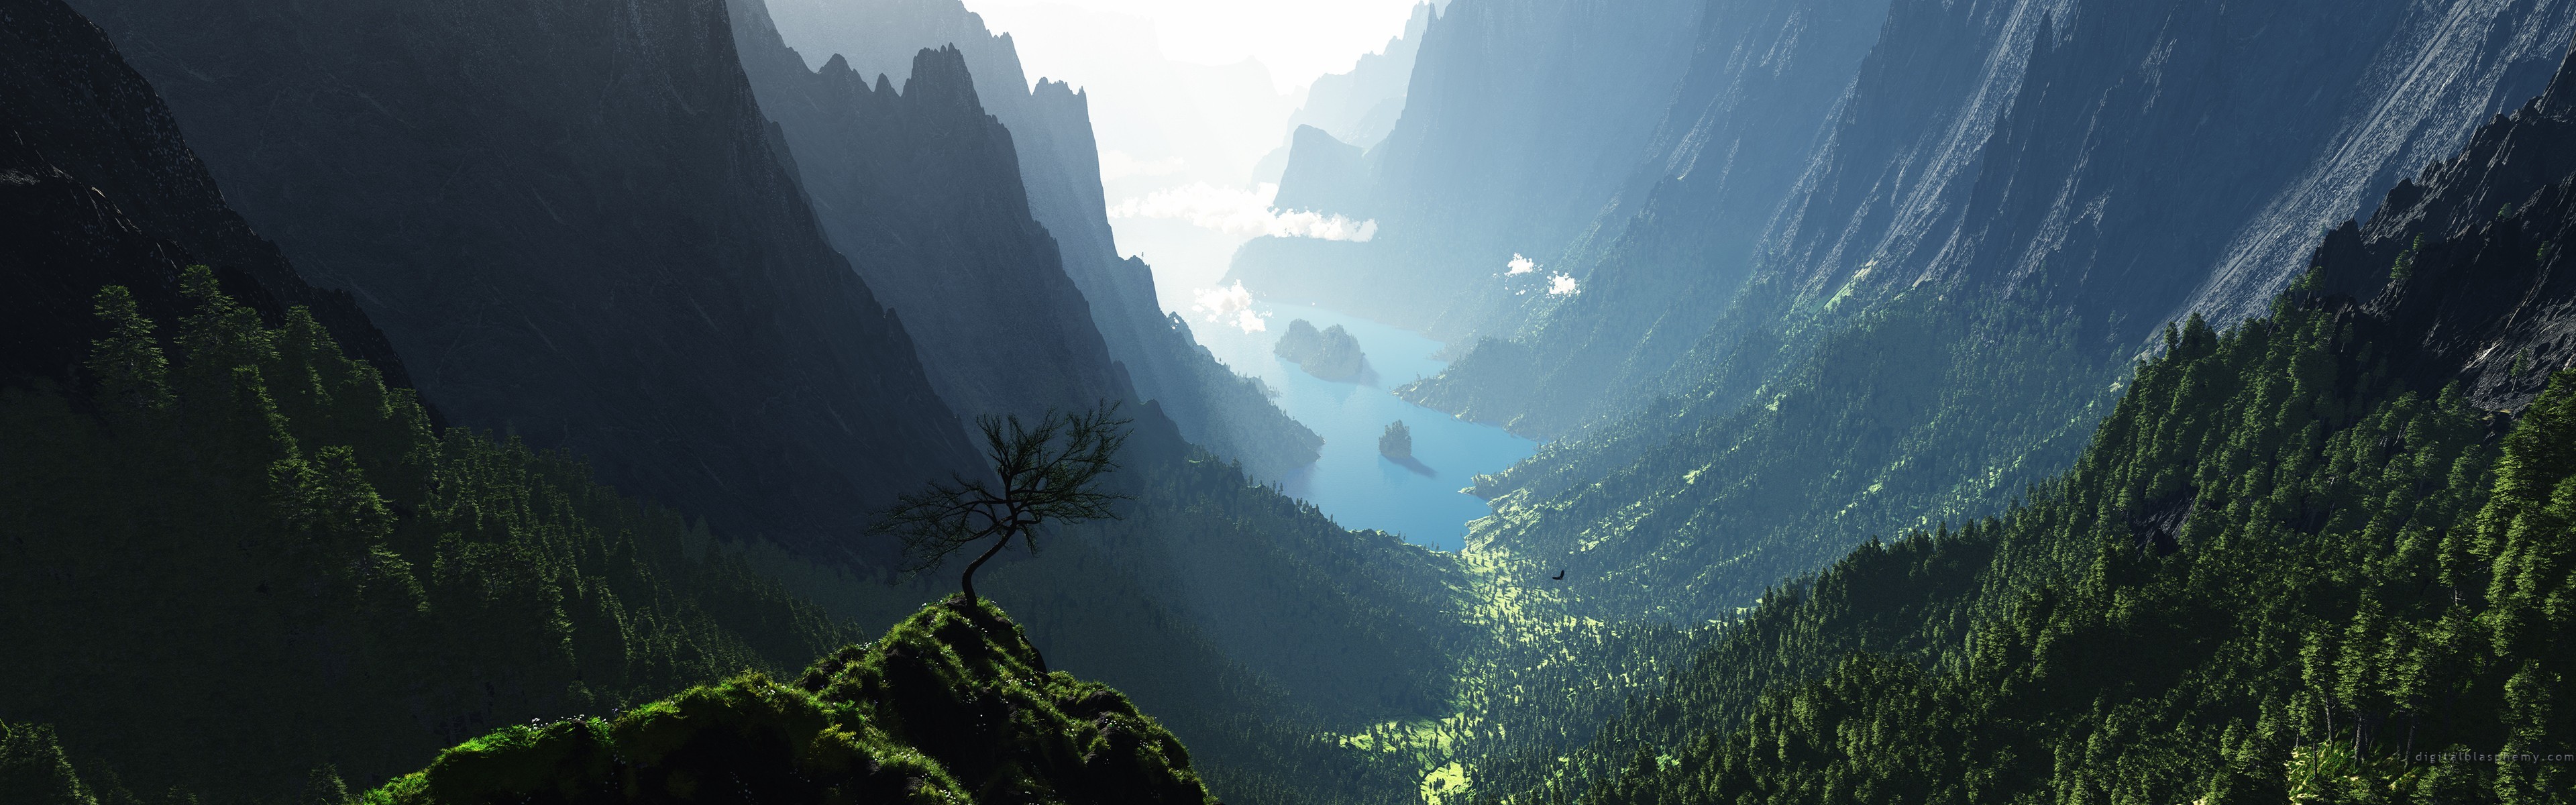 Panorama Nature Landscape 3D Digital Art Wallpaper:3840x1200